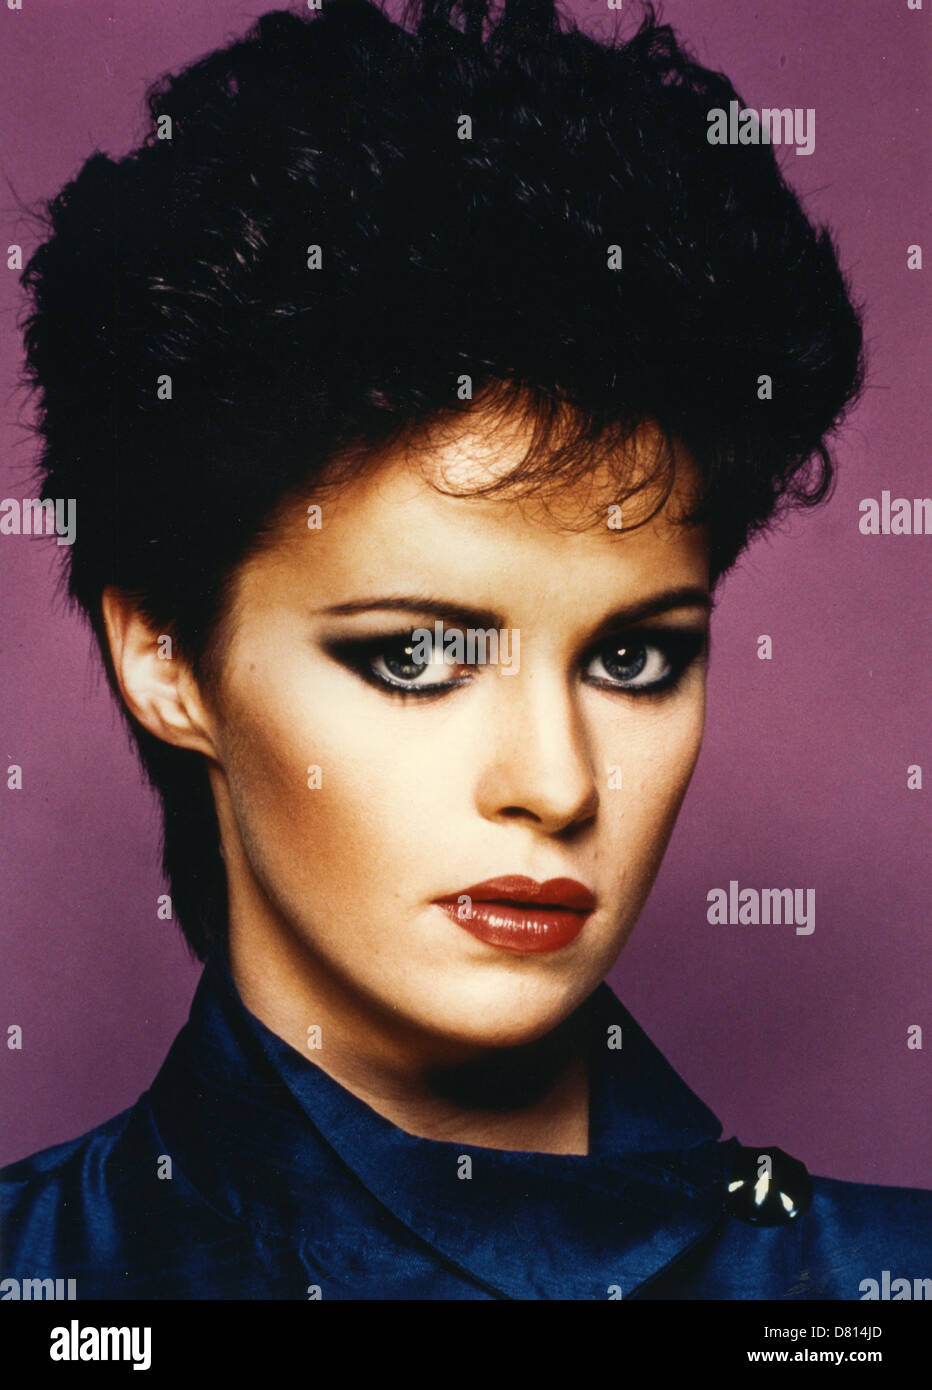 SHEENA EASTON  Promotional photo of Scottish pop singer about 1981 Stock Photo